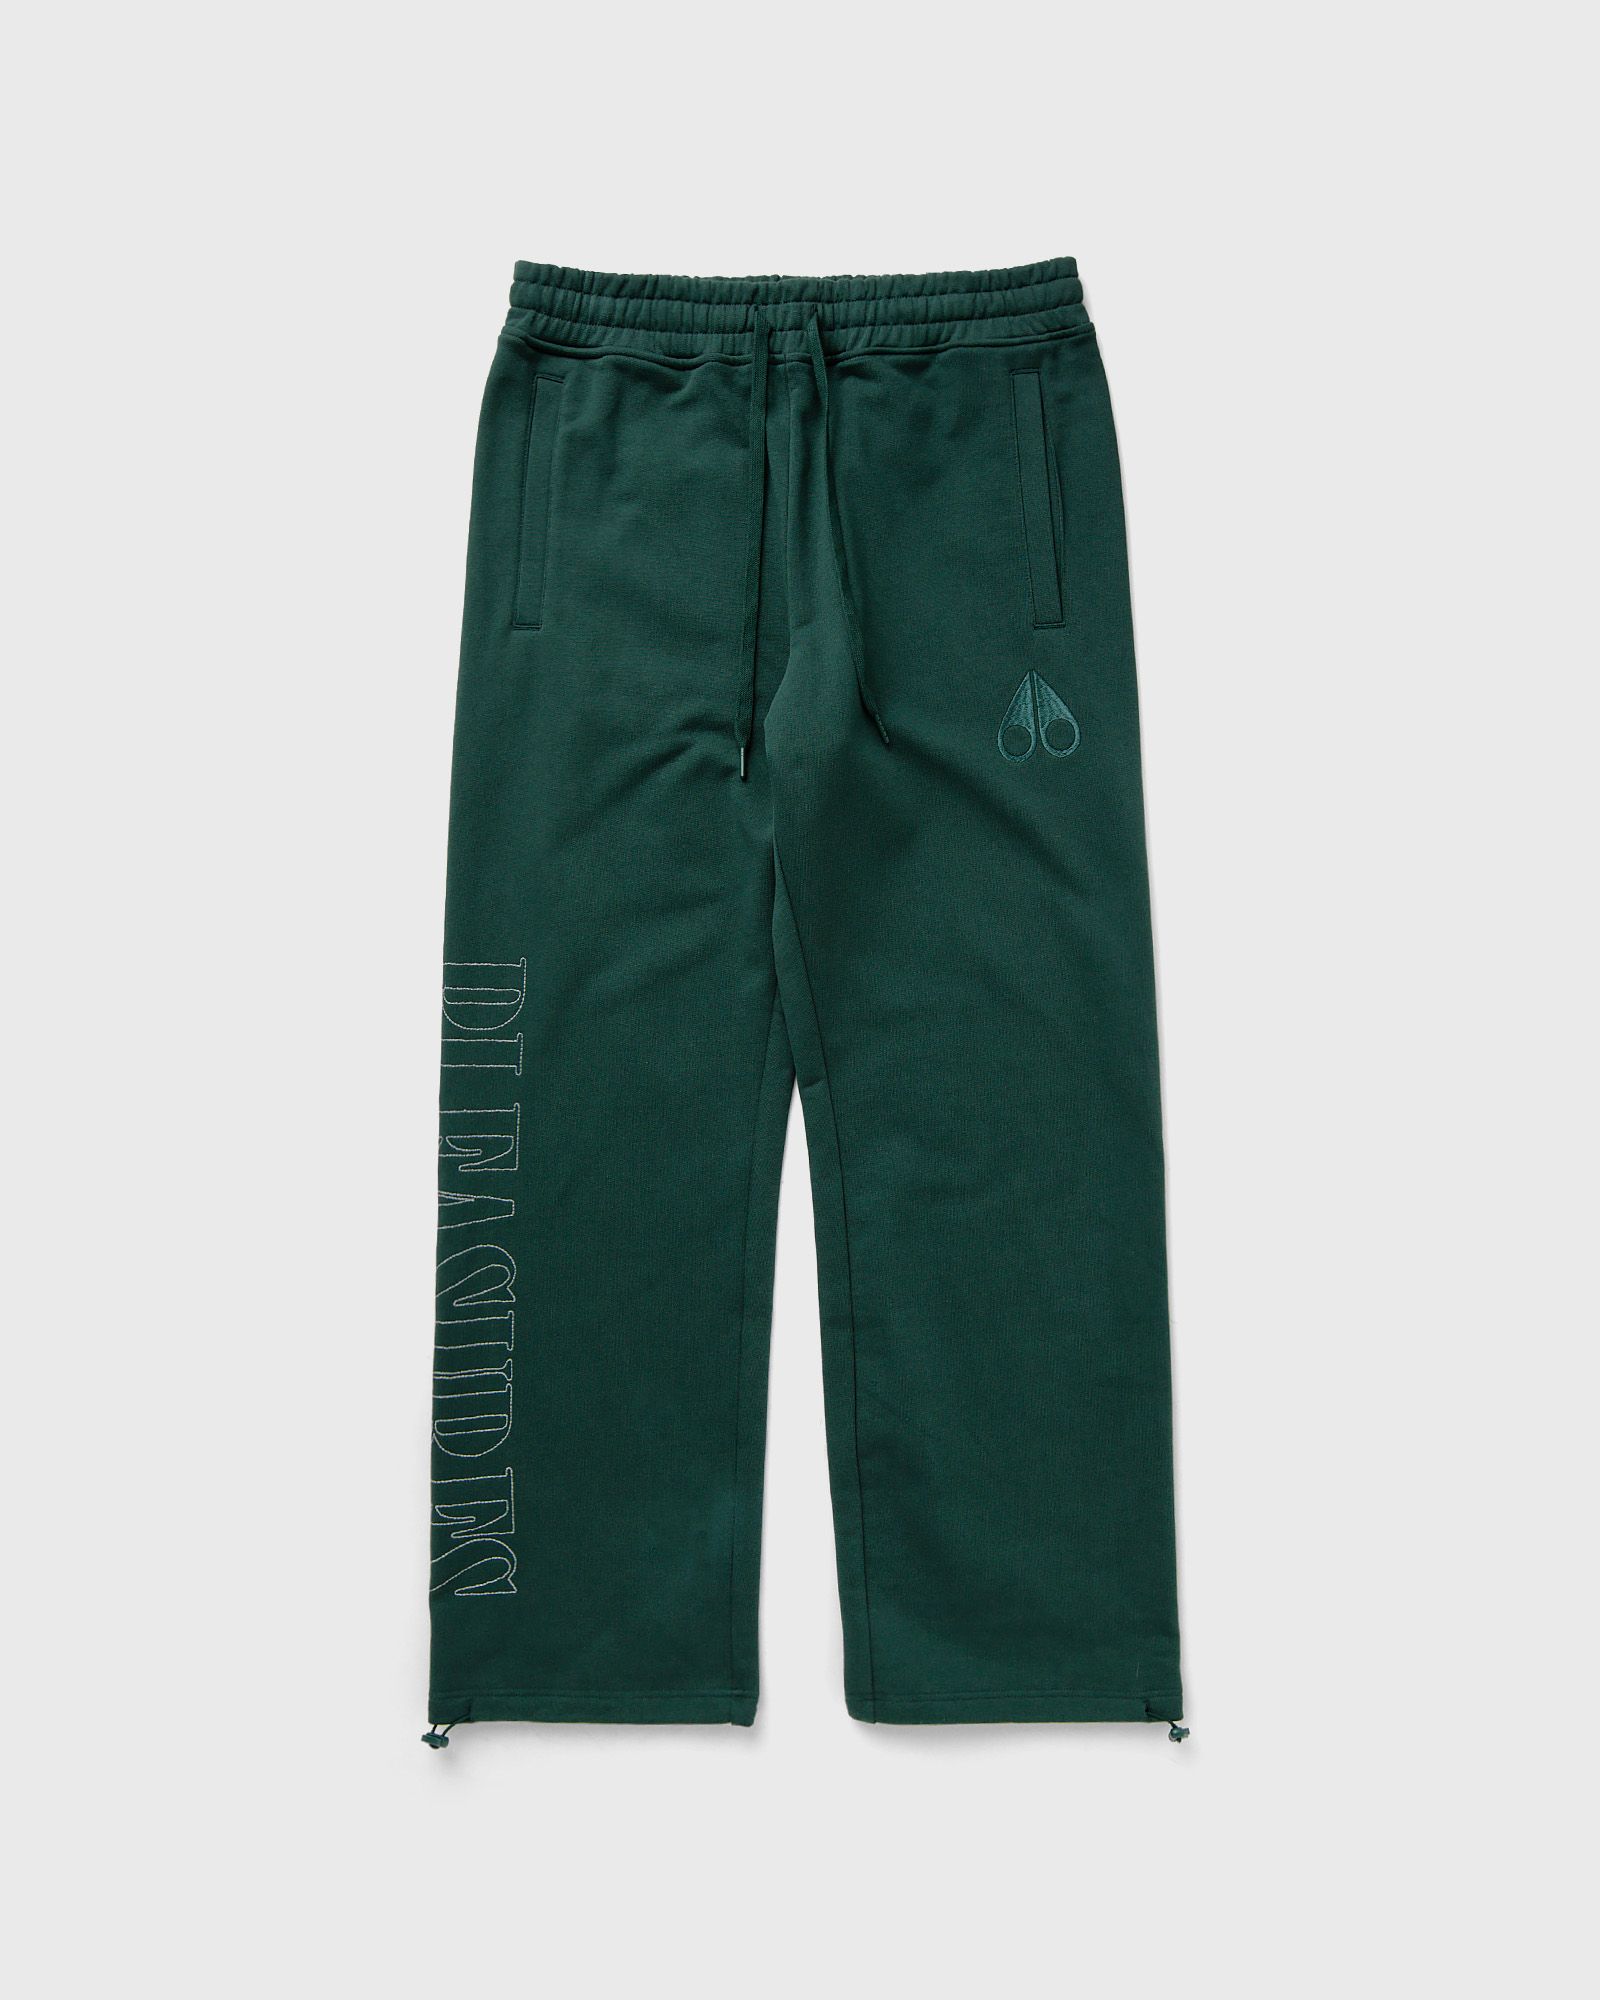 Moose Knuckles - x pleasures logo sweatpants men sweatpants green in größe:xl